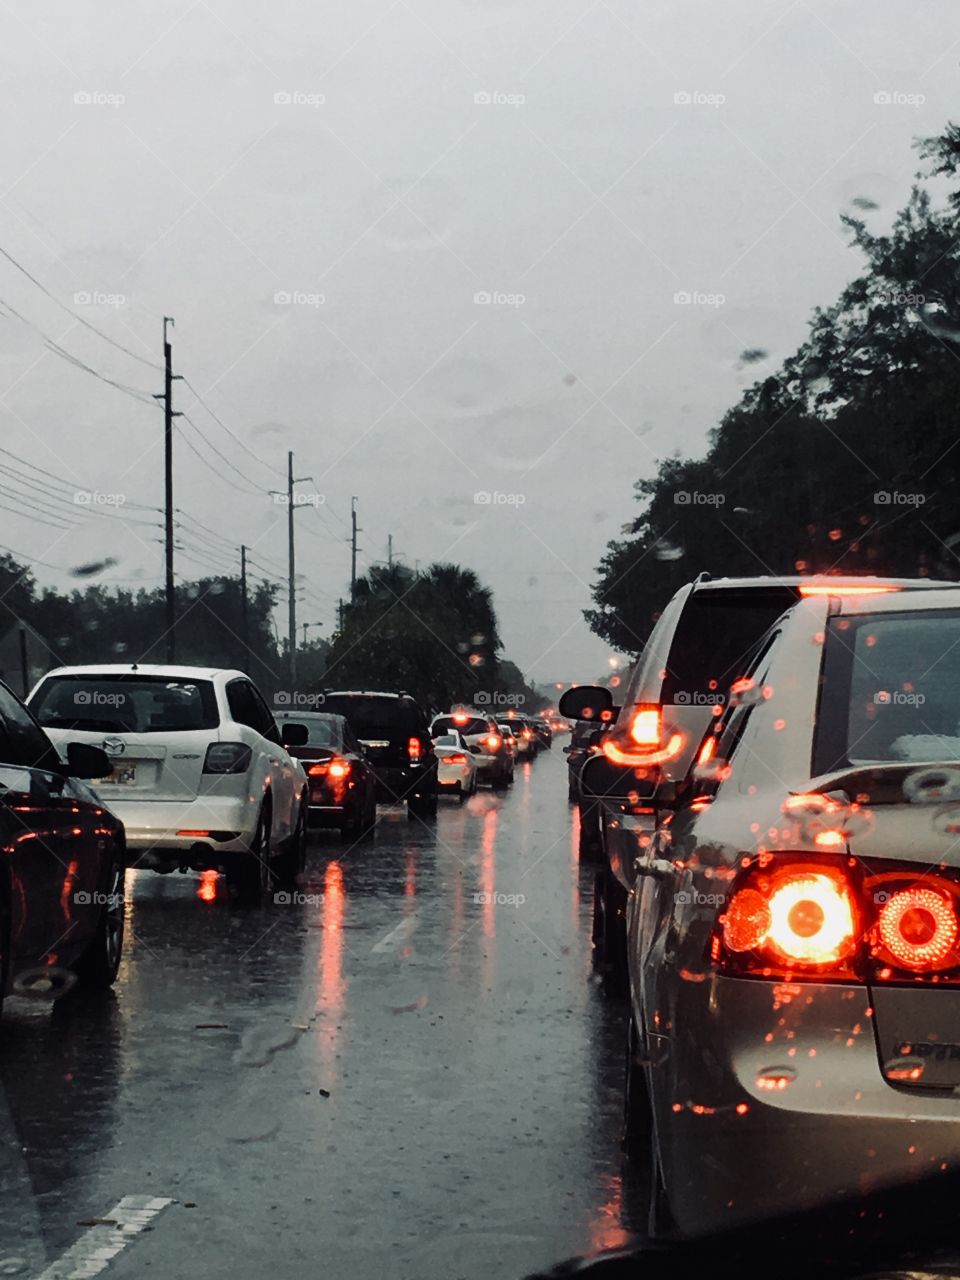 Traffic on a rainy road